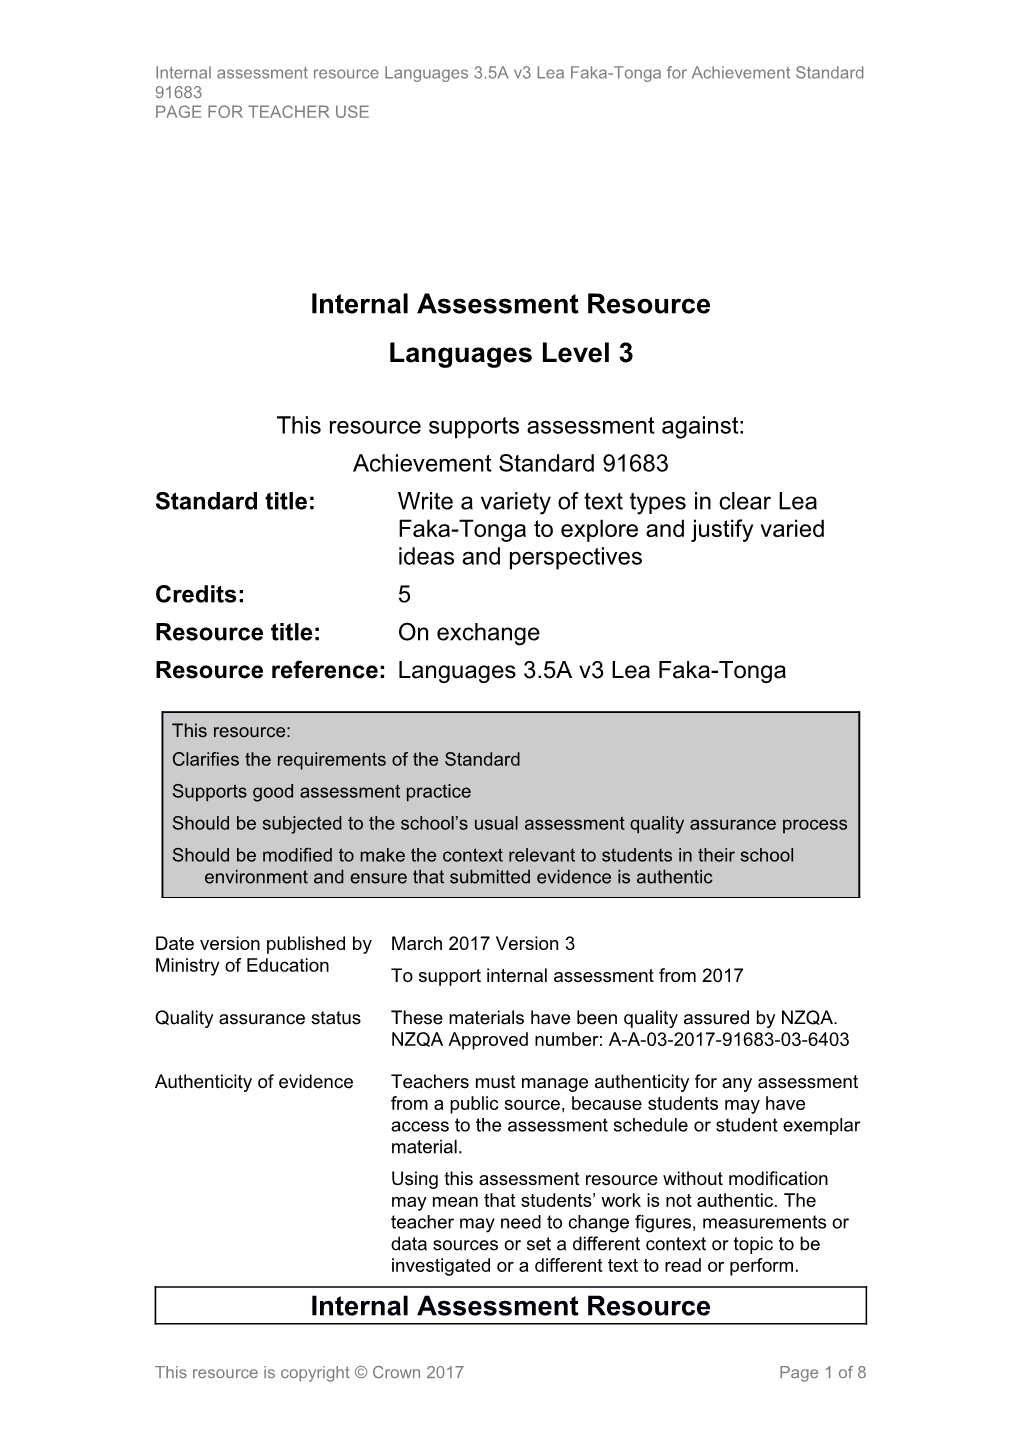 Level 3 Languages Internal Assessment Resource - Lea Faka-Tonga